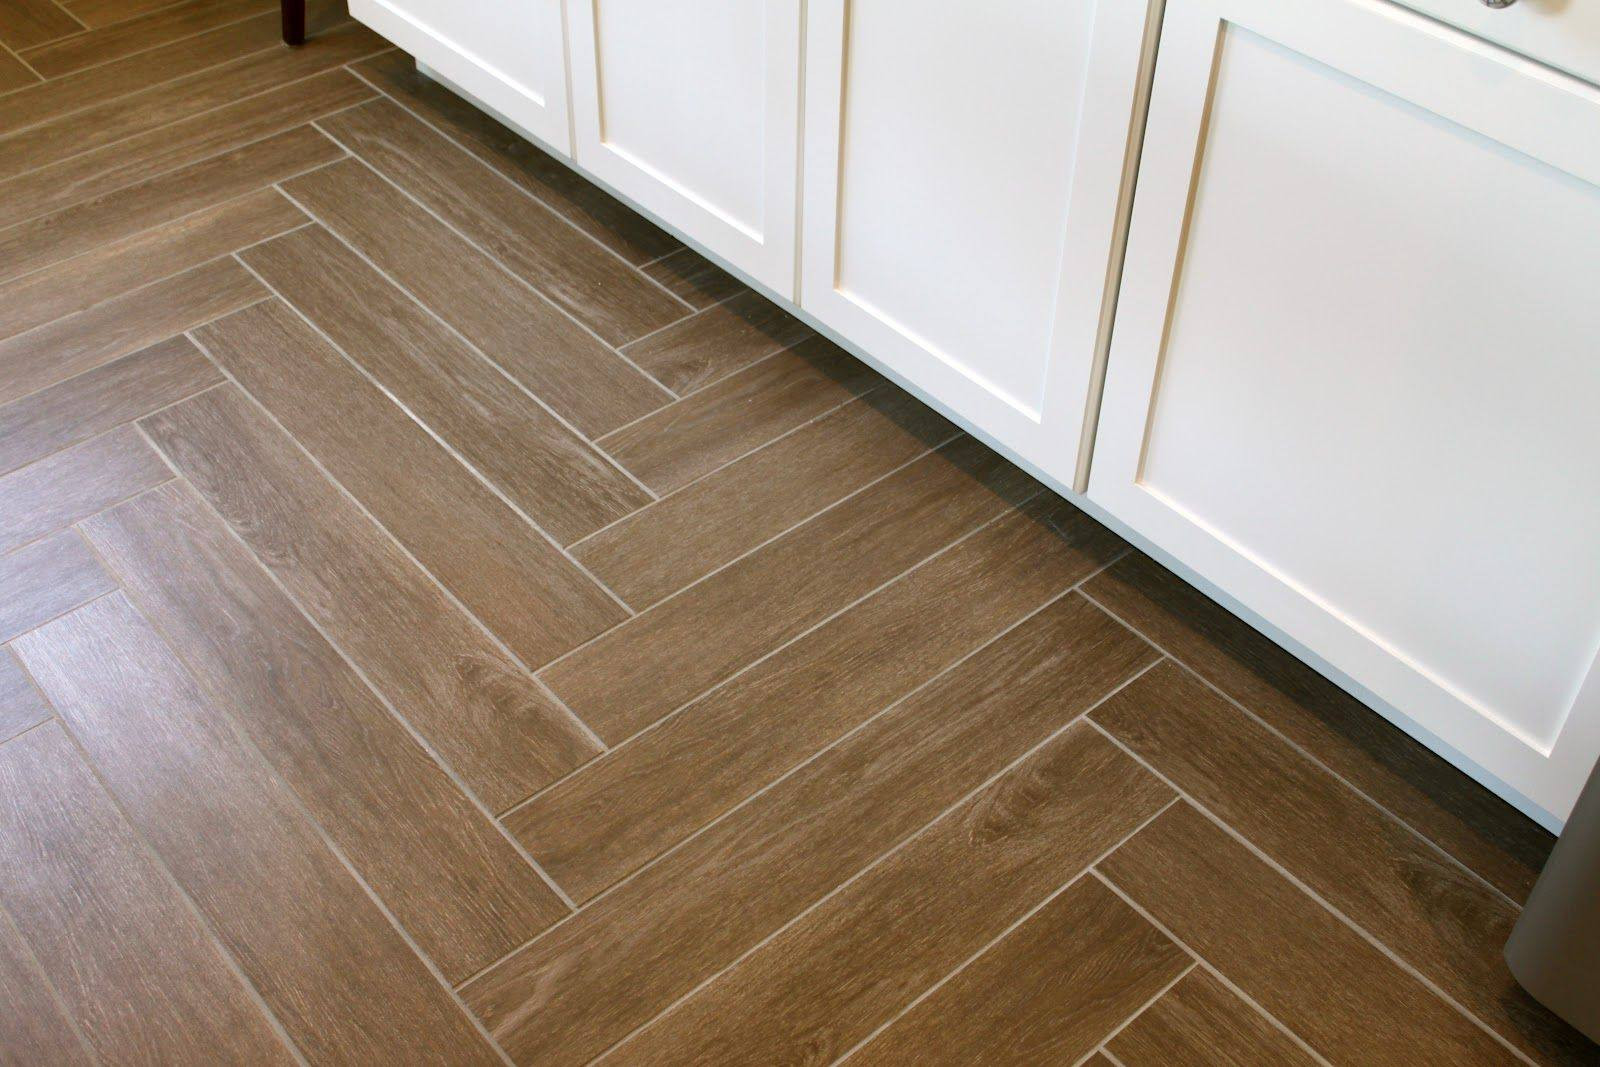 hardwood floor colors pinterest of 10 tile flooring that looks like wood collections best flooring ideas within tile flooring that looks like wood ideas